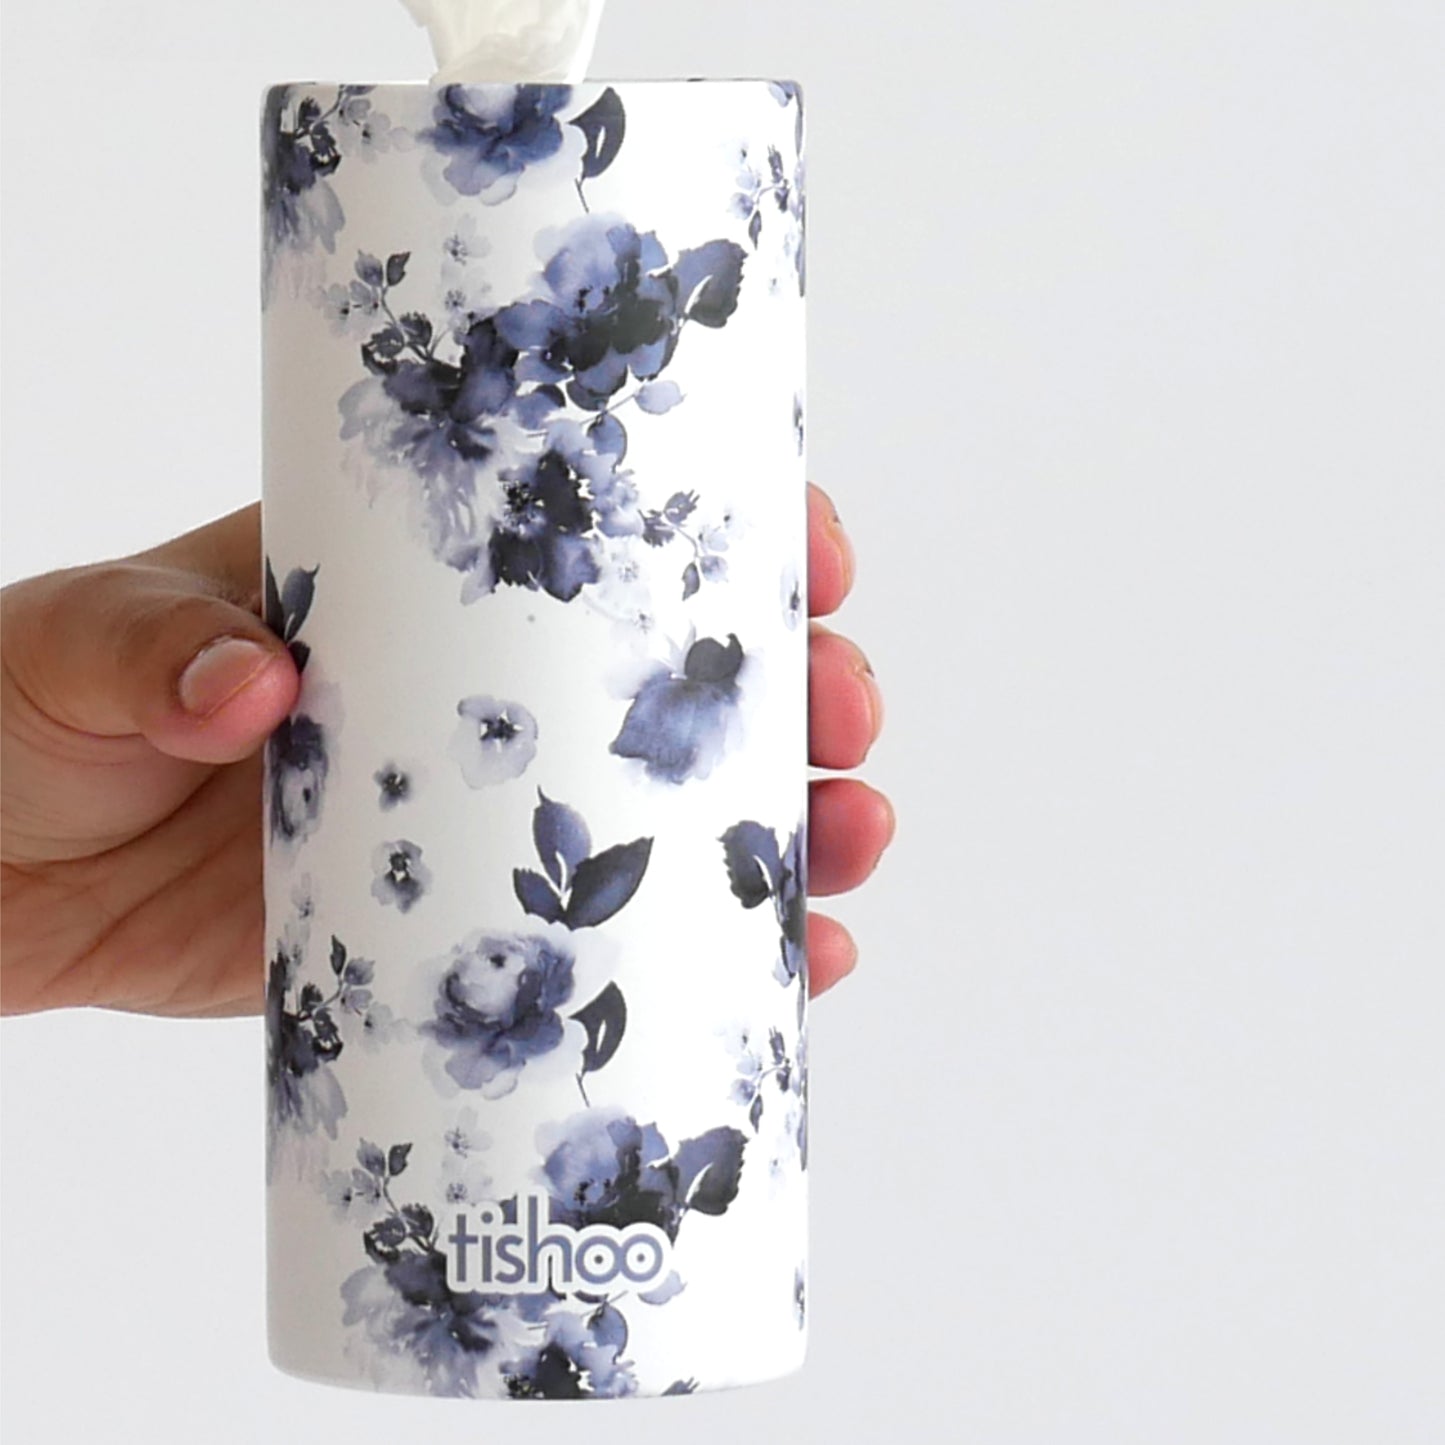 tishoo Luxury Tissues Blue/Floral design in hand